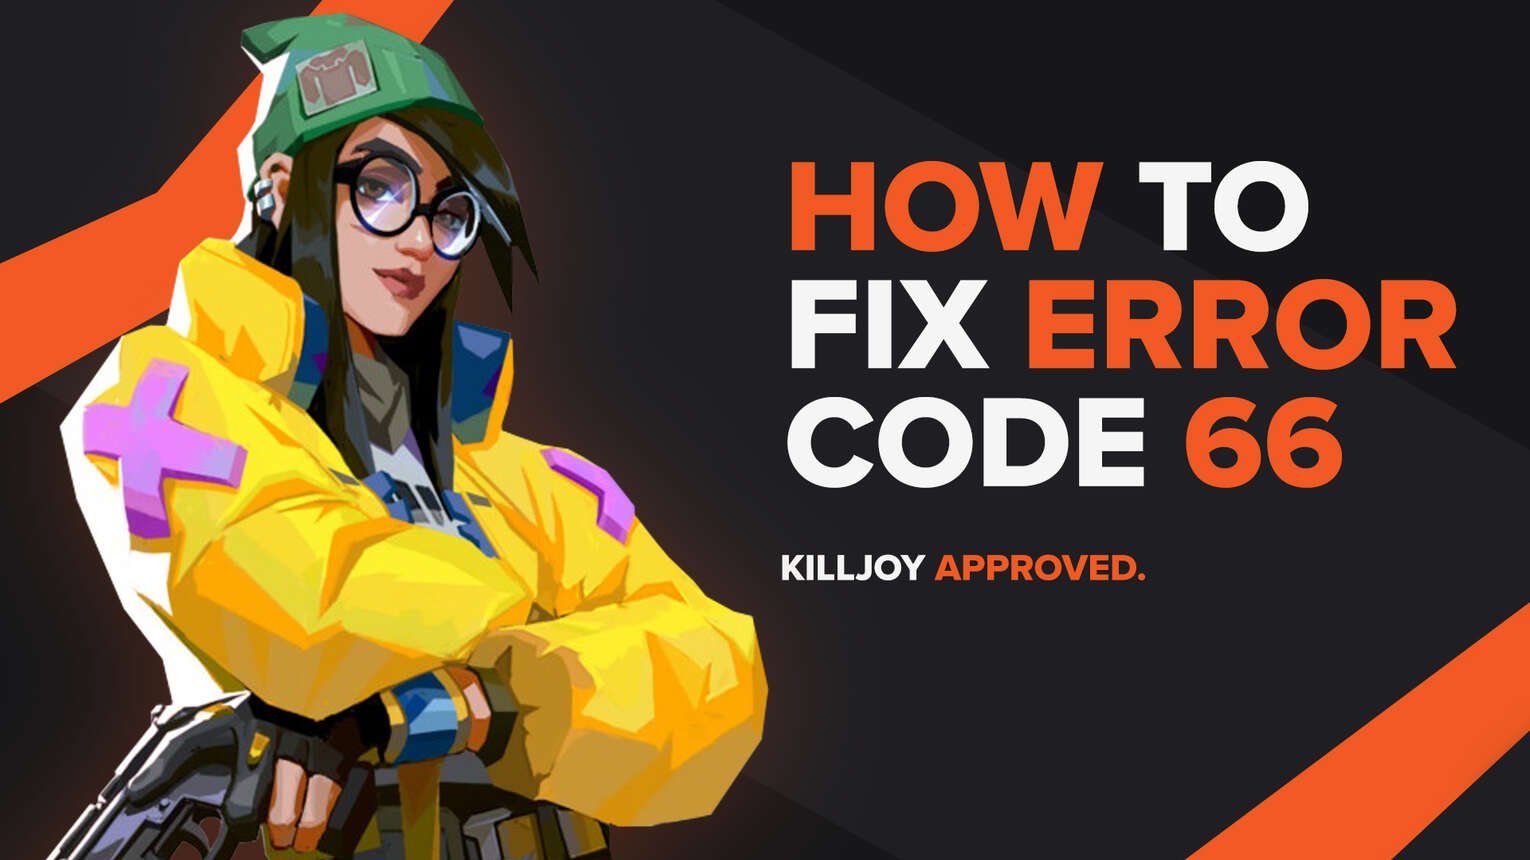 Valorant Error Code 66: How to Fix It